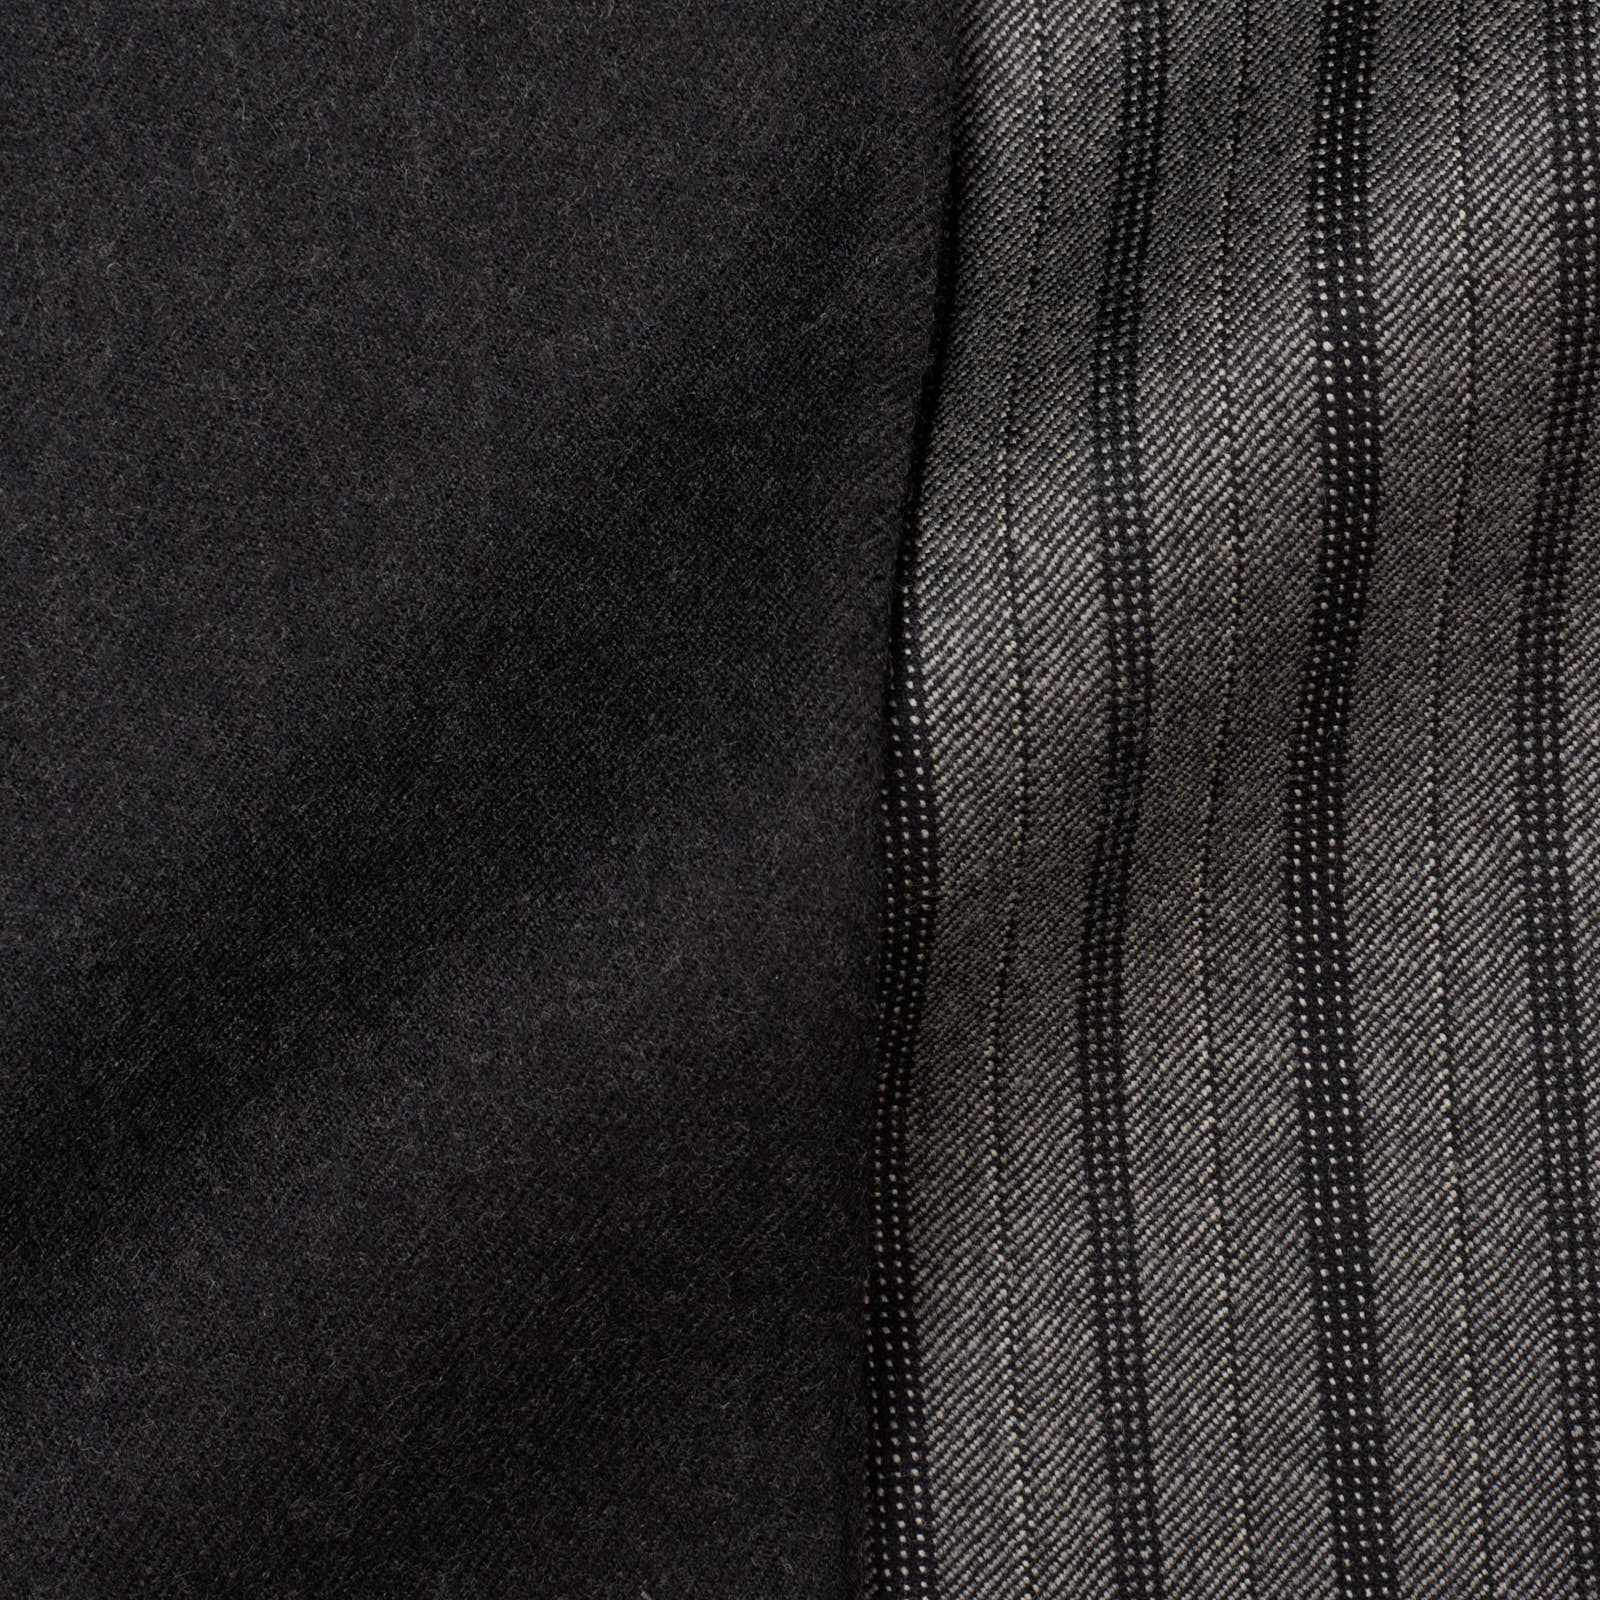 ABLA for Vannucci Dark Gray Wool Handmade 3 Piece Morning Suit Suit EU 46 NEW US 36